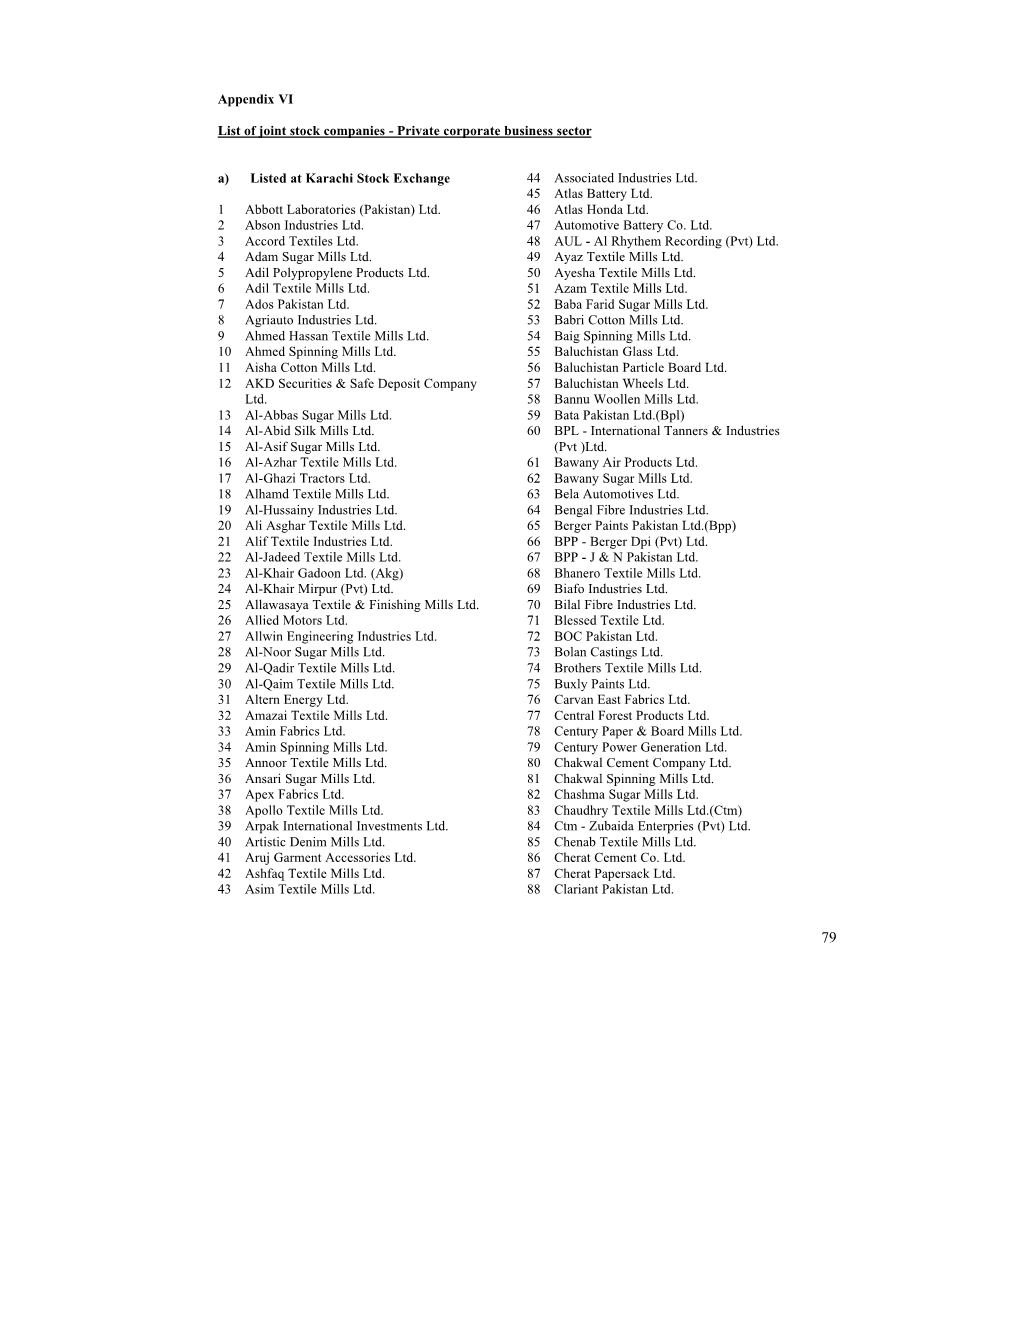 Appendix VI List of Joint Stock Companies